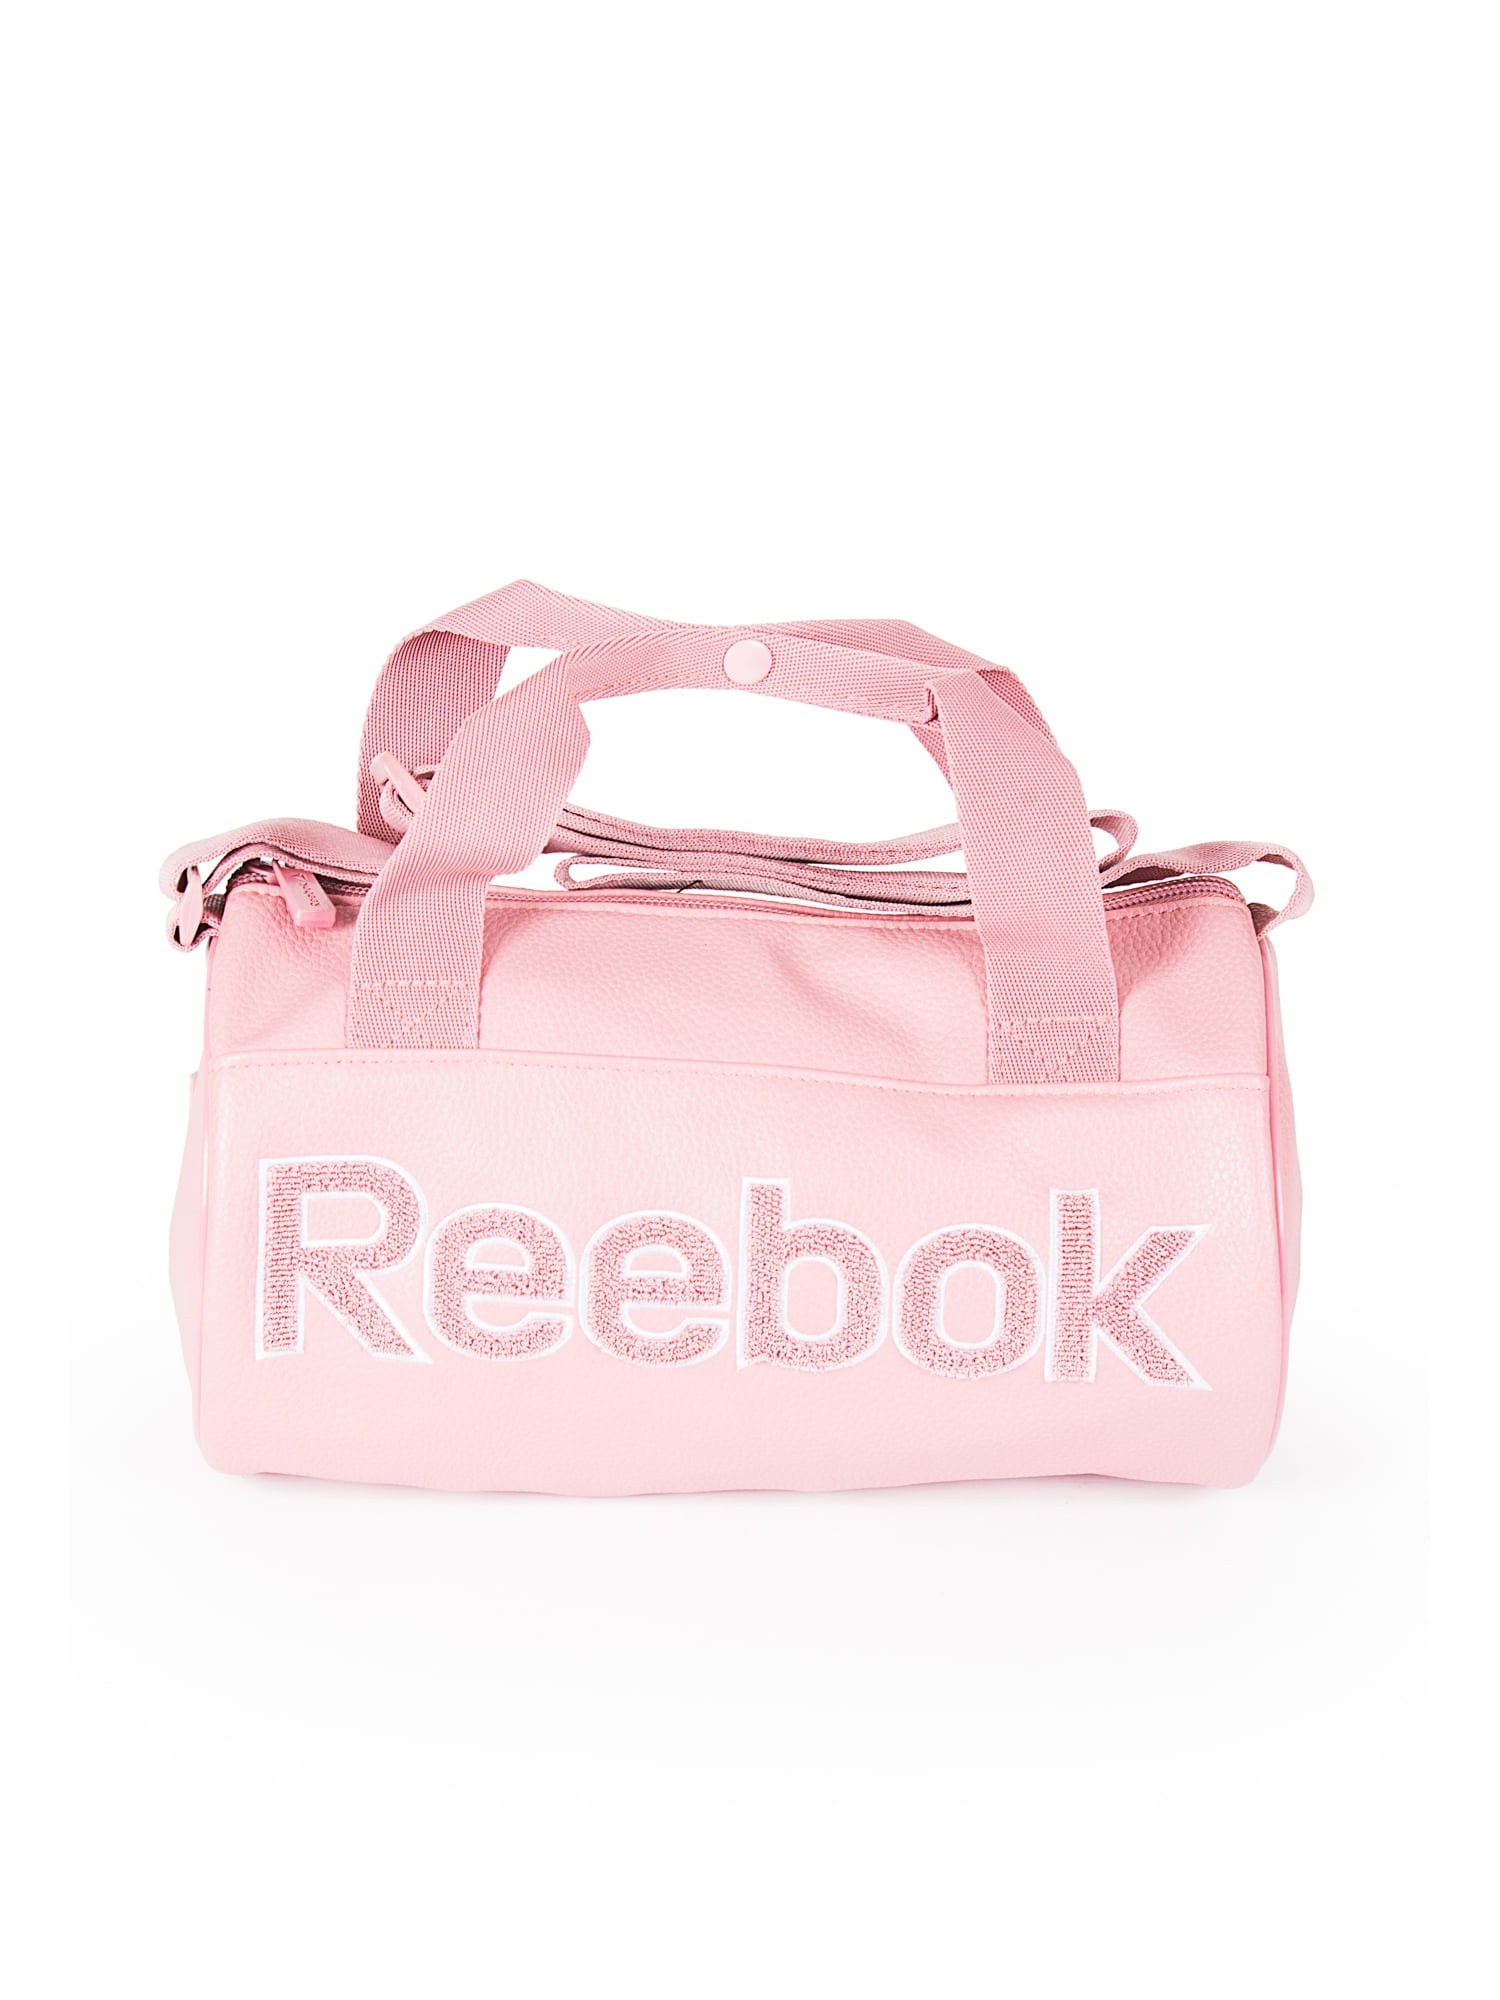 Reebok Trust Women's Leopard Mini Duffle Bag - Walmart.com